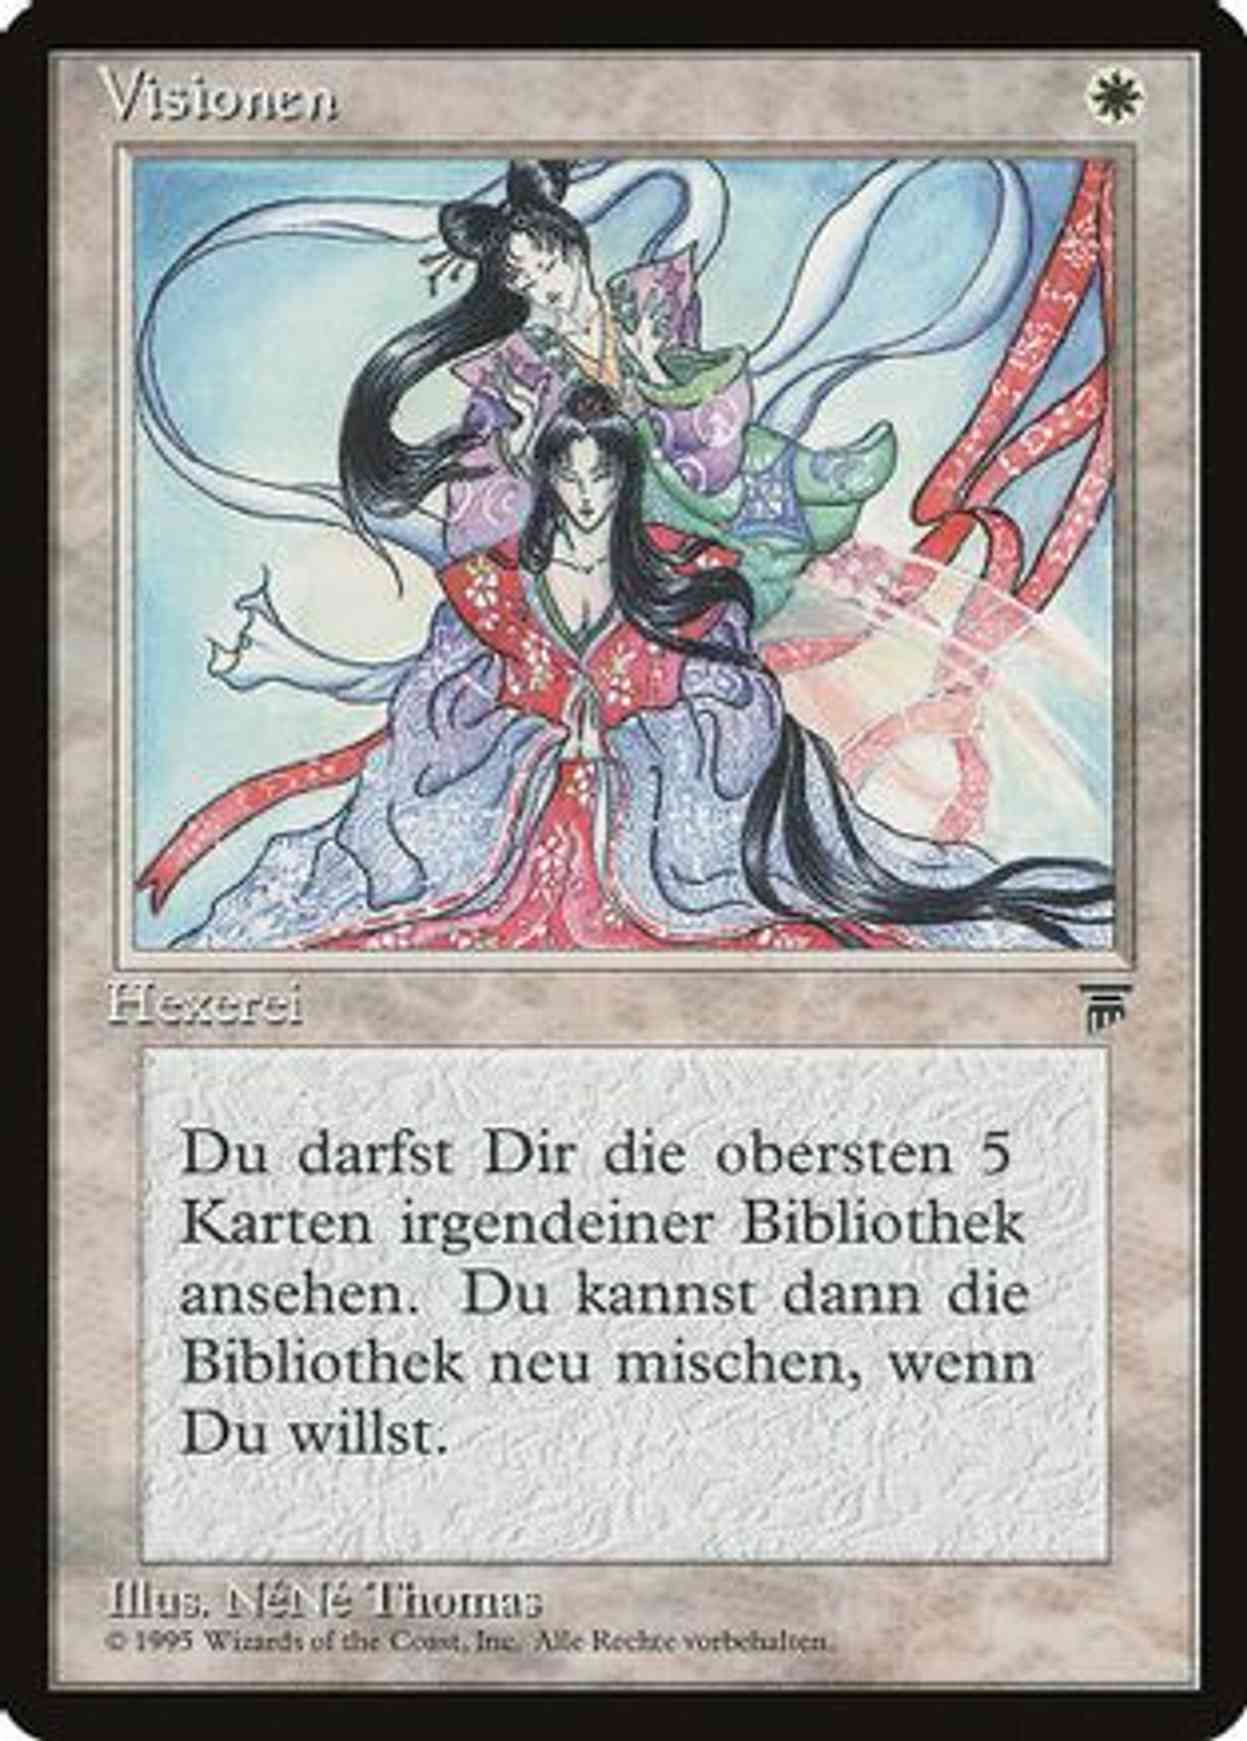 Visions (German) - "Visionen" magic card front